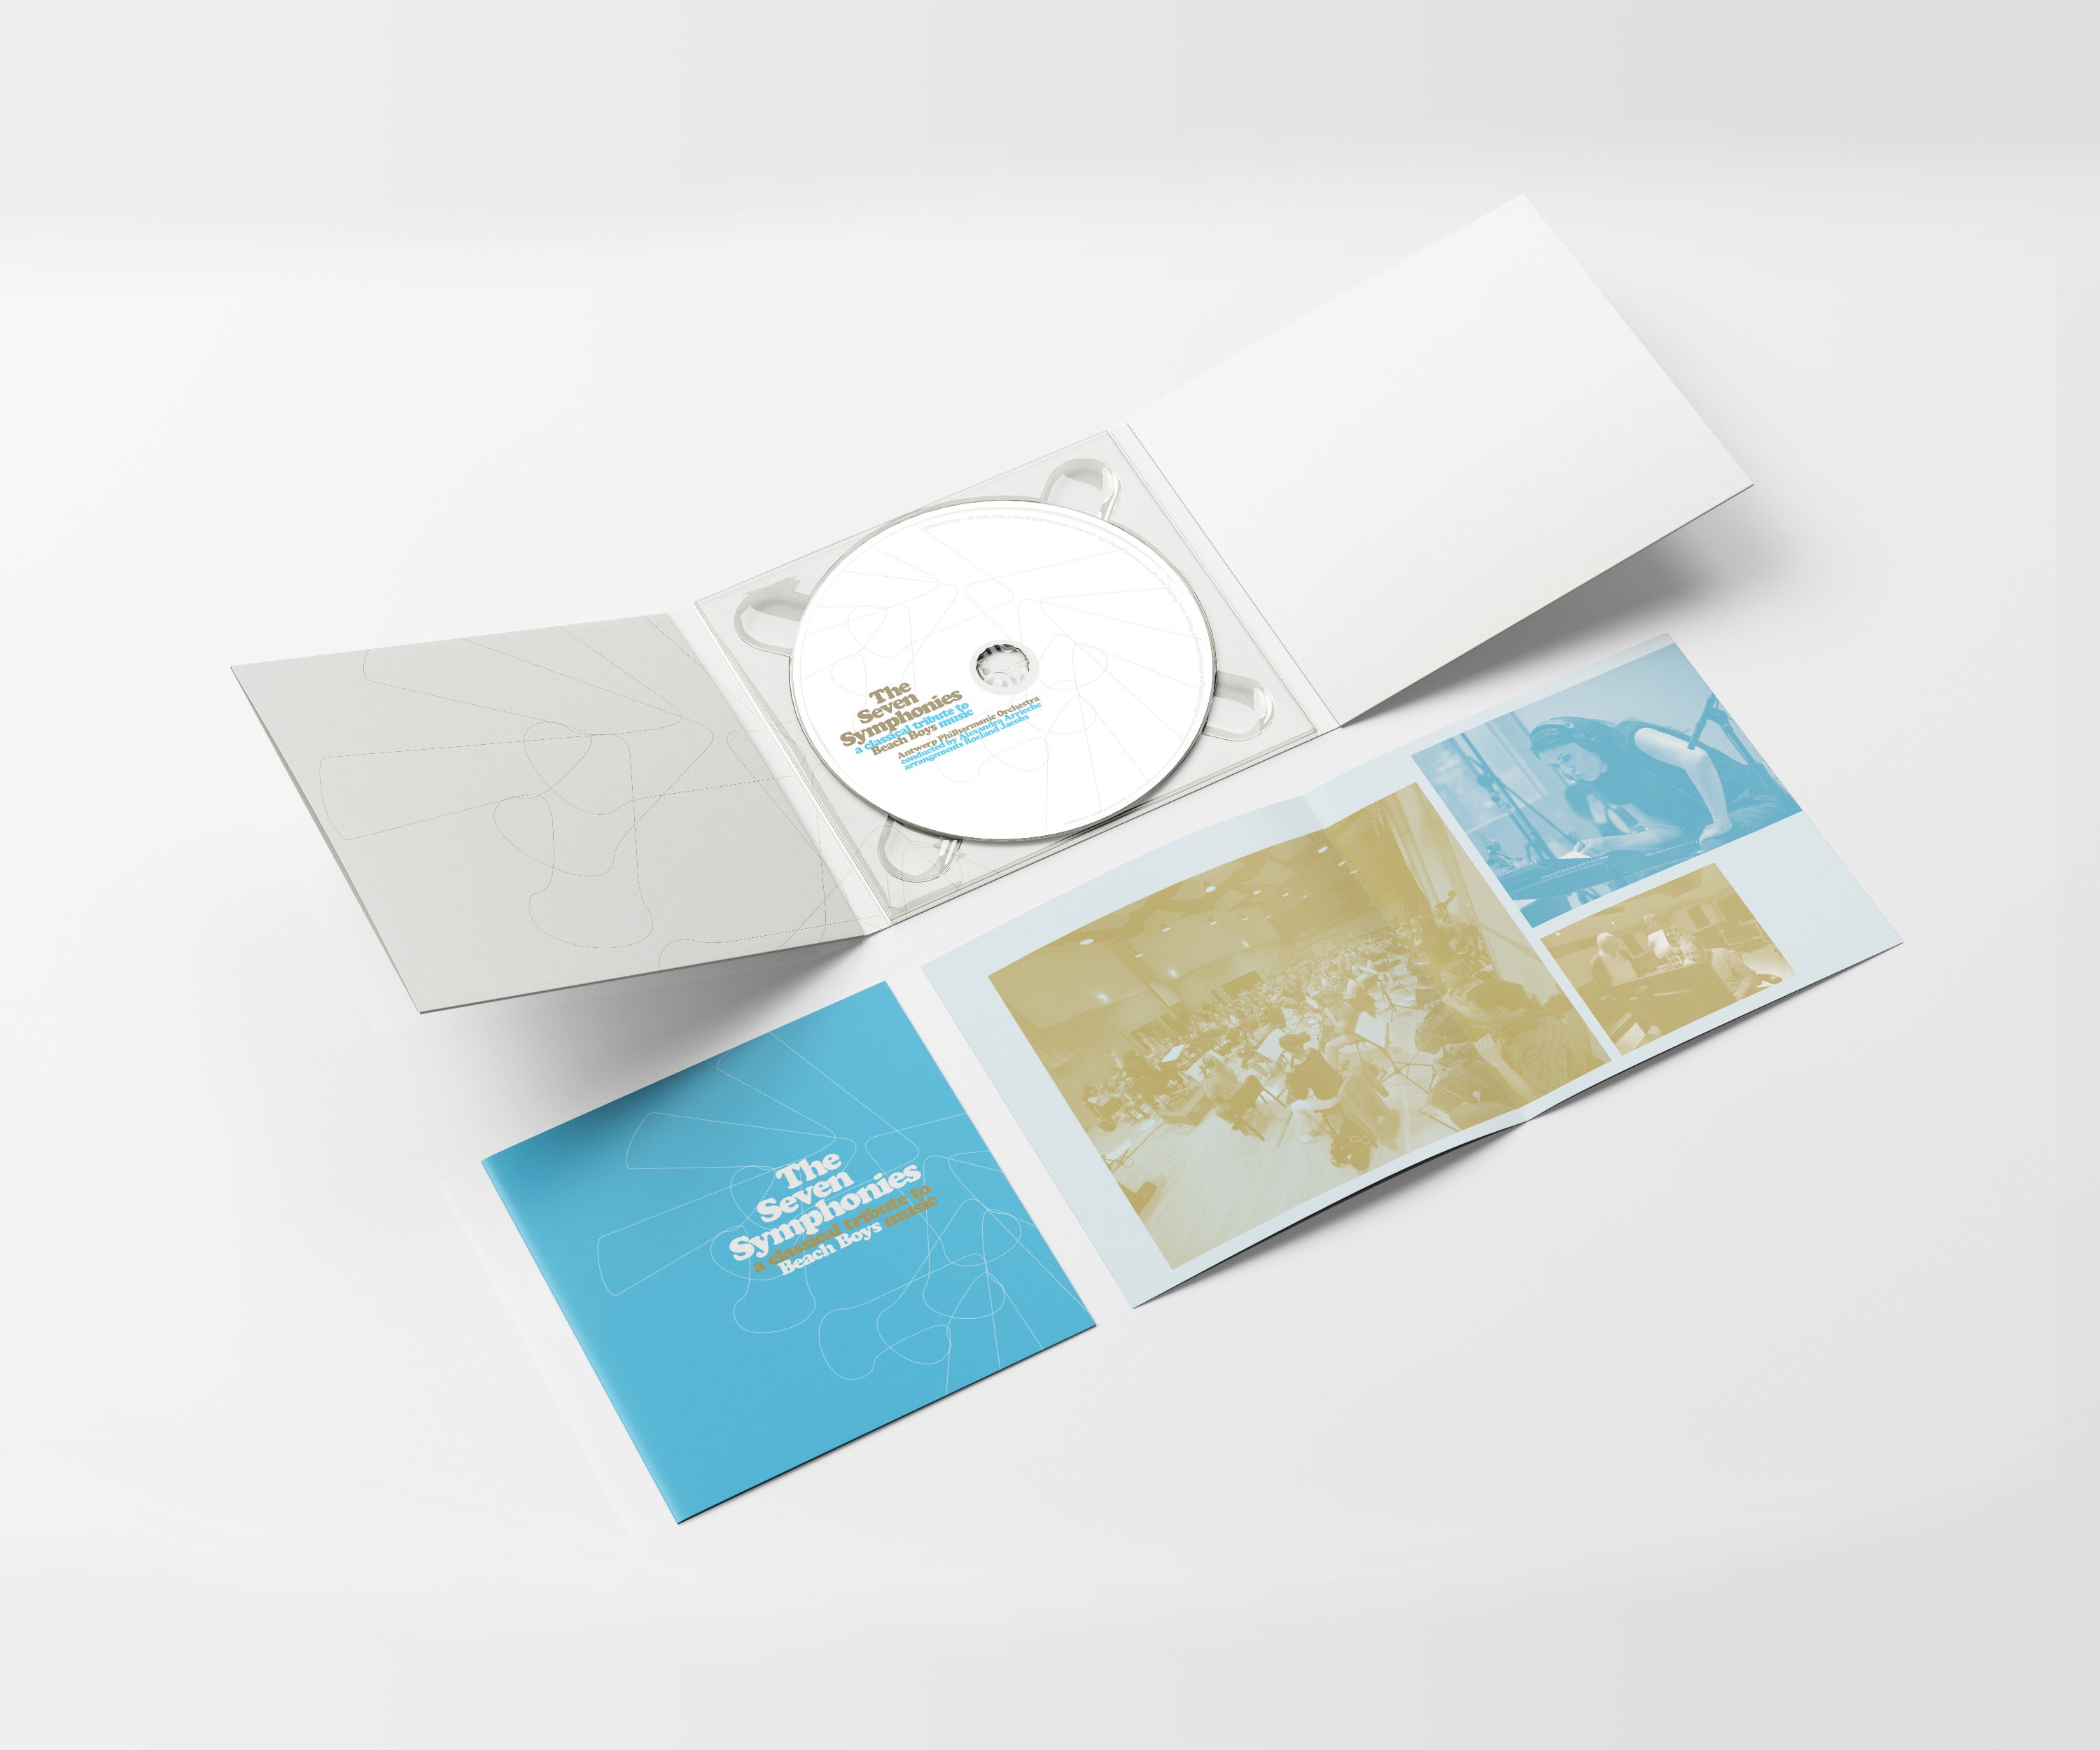 The Seven Symphonies CD – The 7 Symphonies